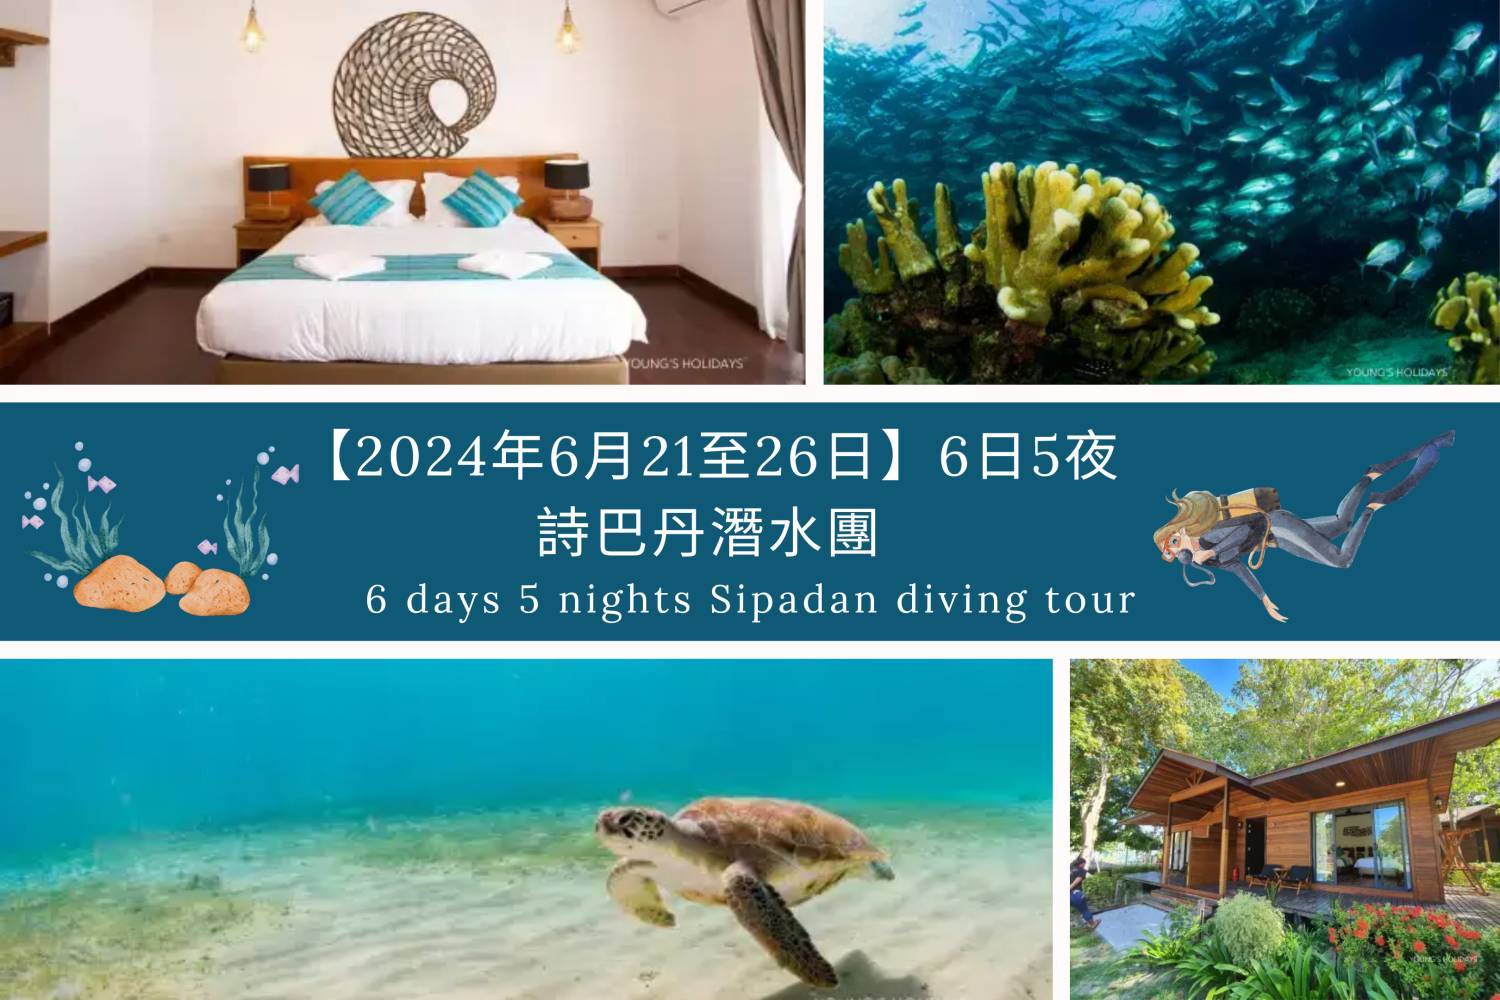 [Malaysia] June 21 to 26, 2024 - 6 days 5 nights Sipadan Diving Trip